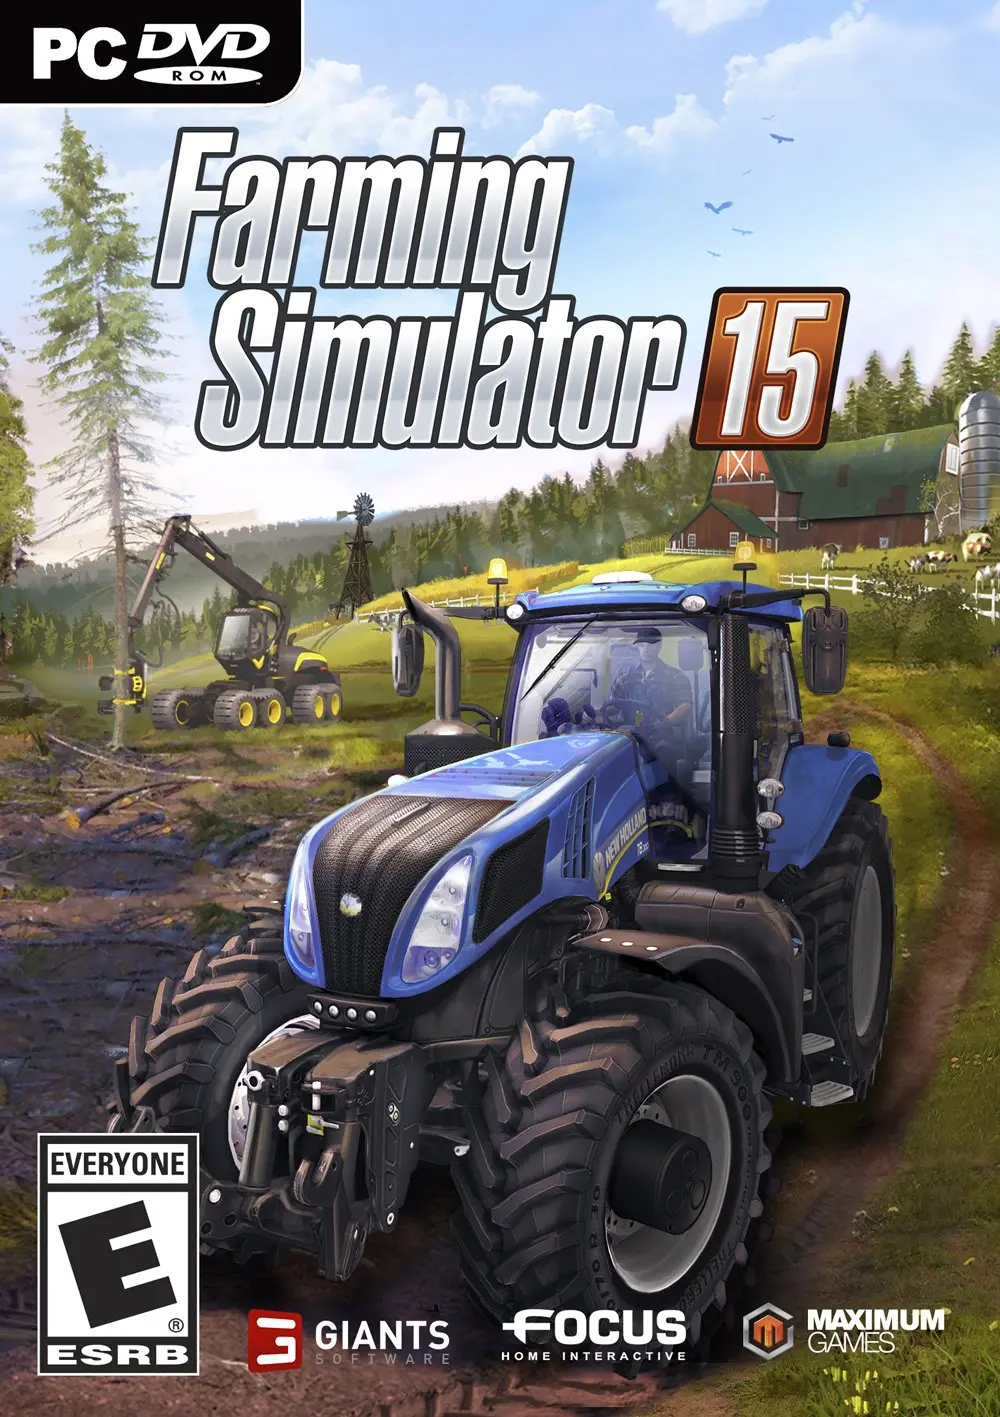 Farming Simulator 15 - ITRunner DLC (PC / Mac) - Steam - Digital Code